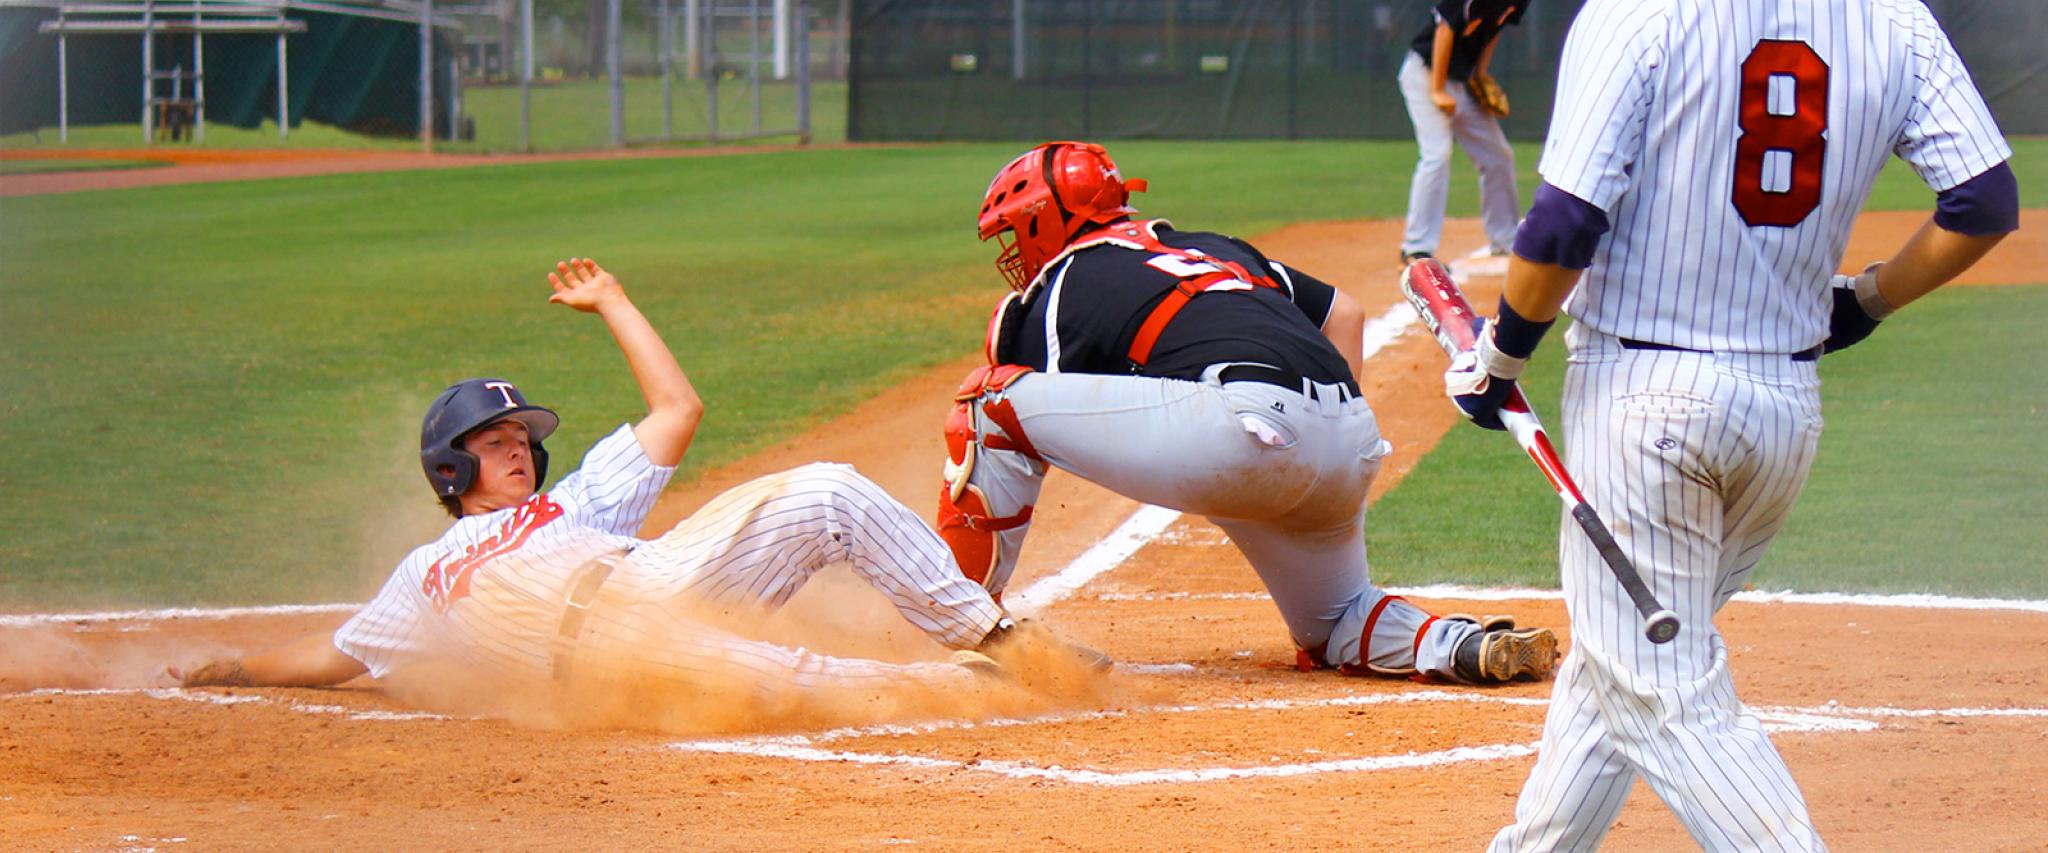 Baseball Player Slides into Home plate